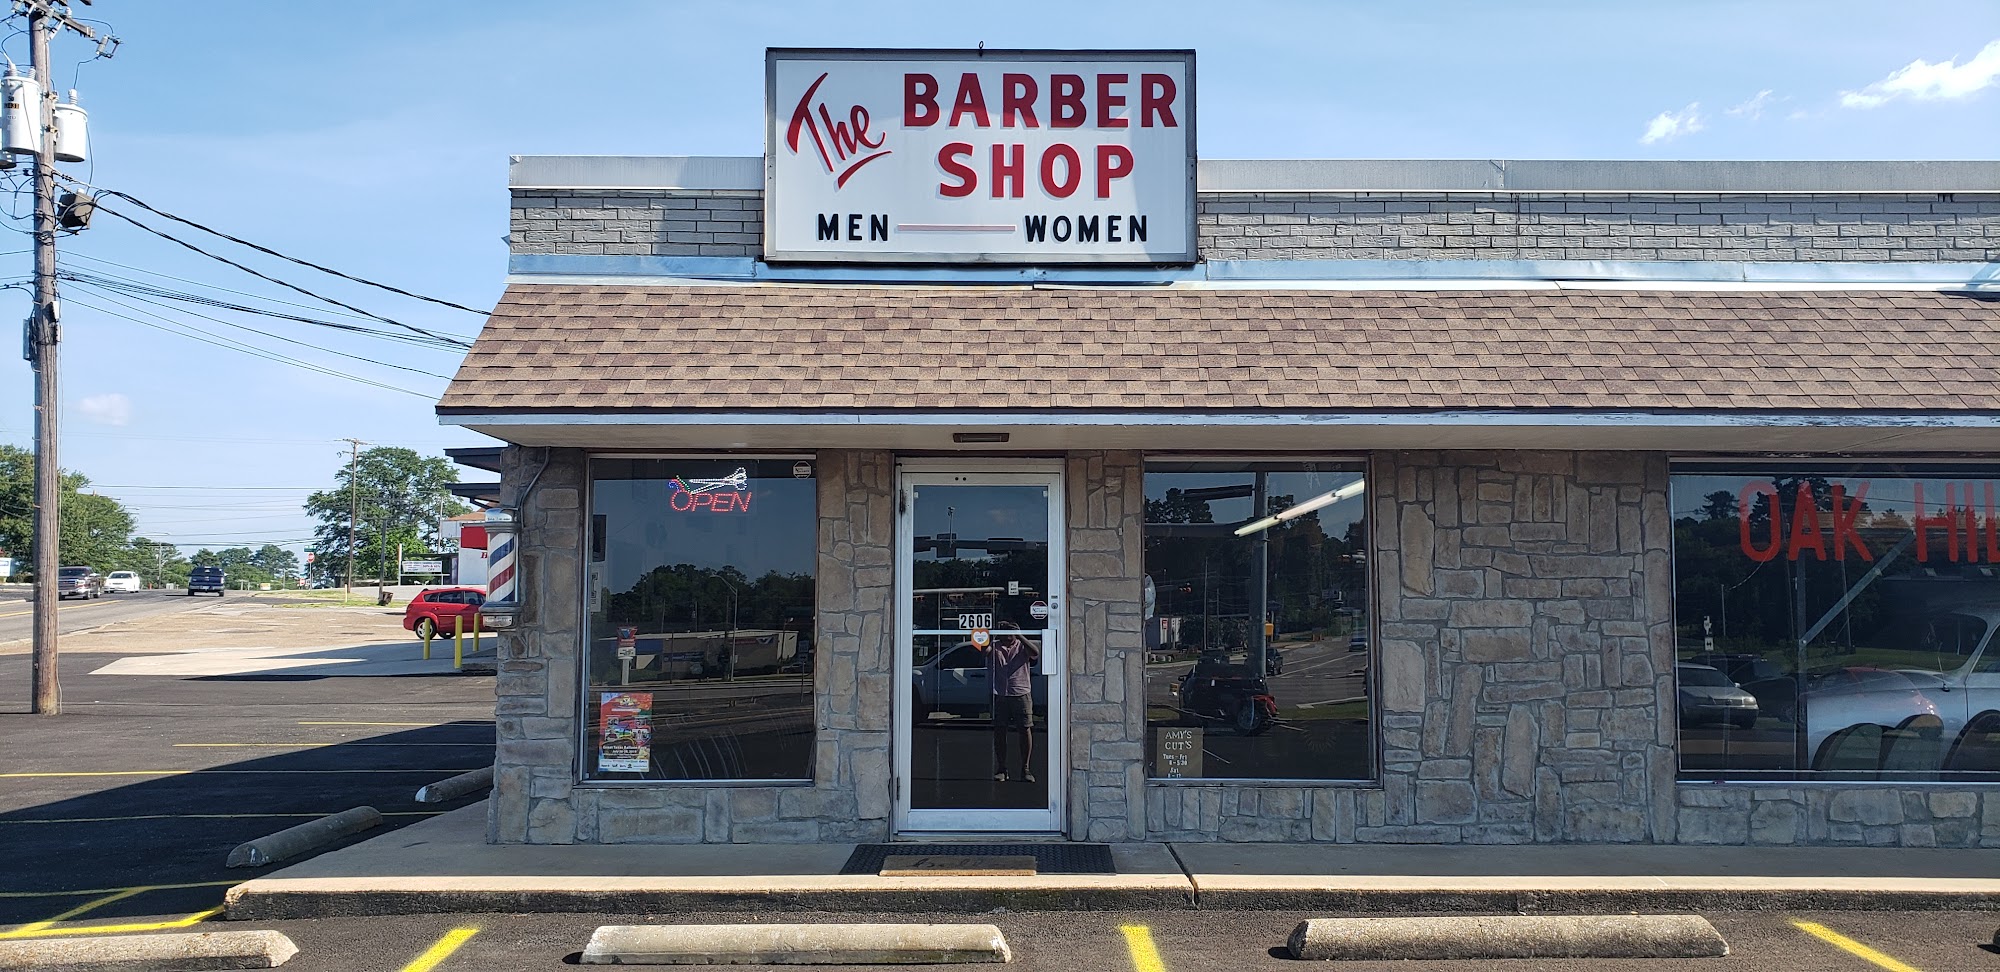 The Barber Shop